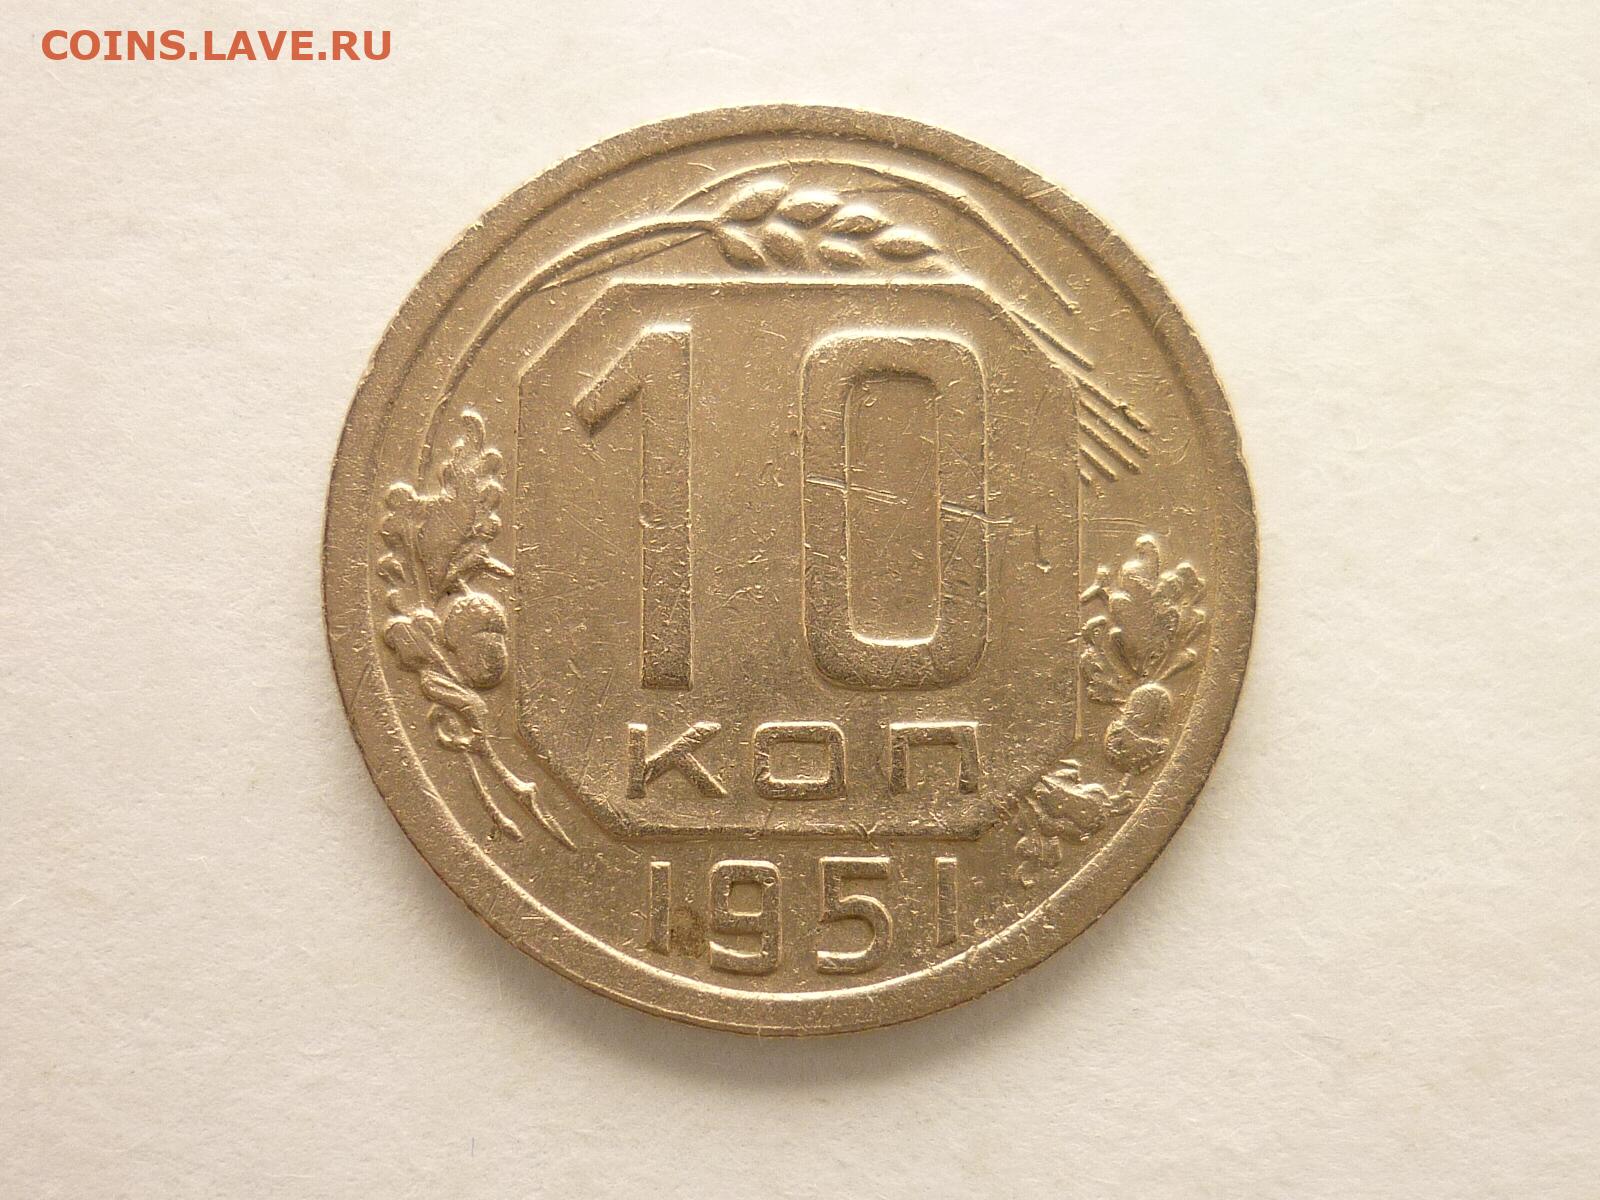 1956 год монеты цена. 20 Копеек 1946. 20 Копеек 1939. Монеты СССР 20 копеек 1956г. 20 Копеек 1937 года.